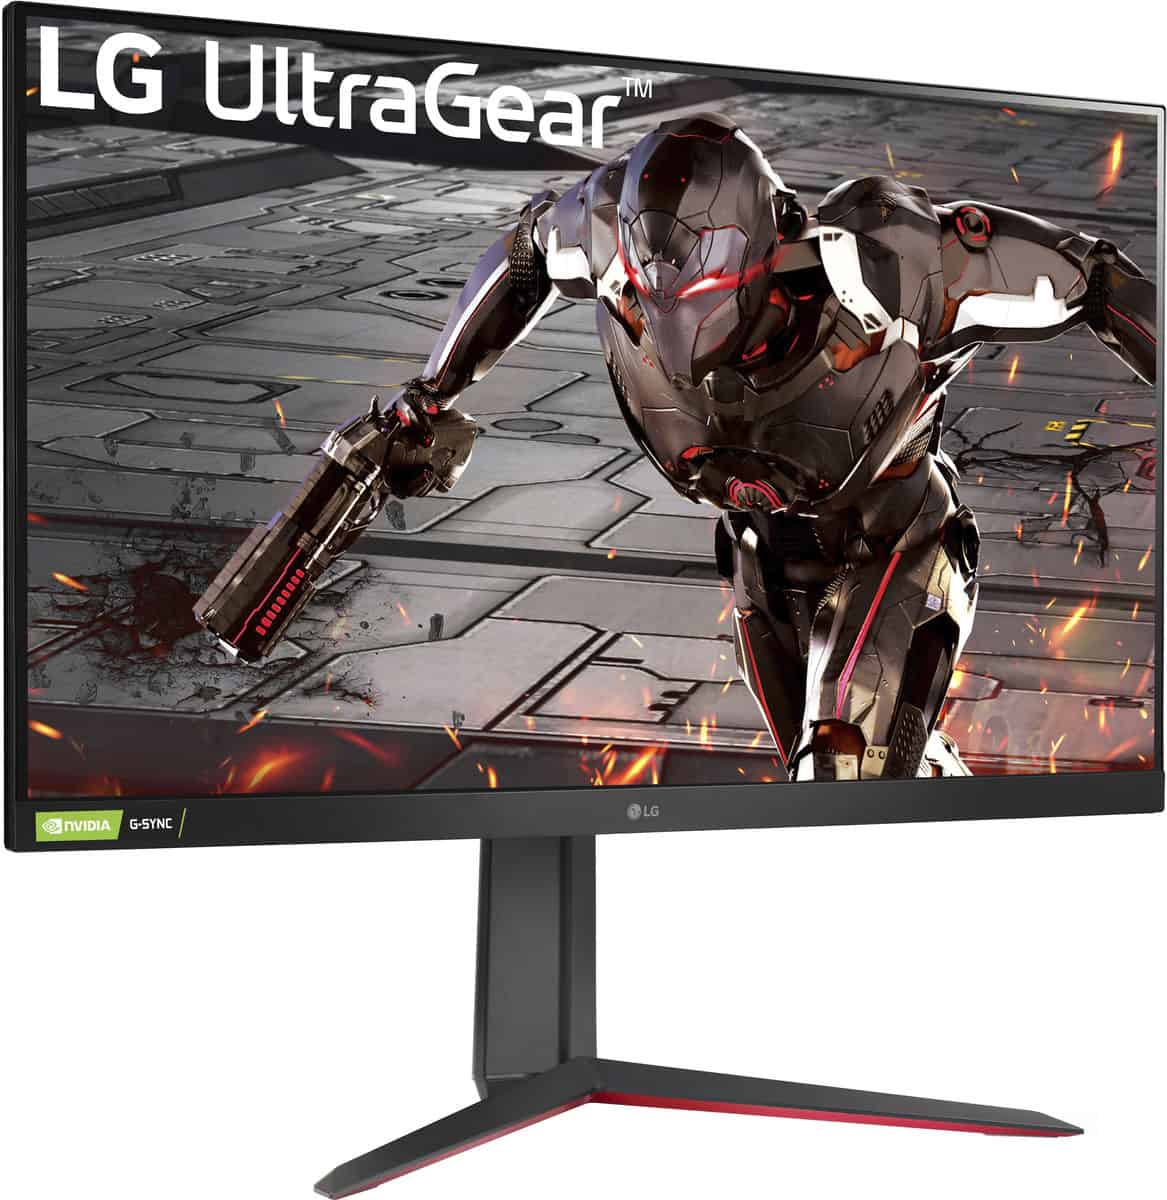 Save $70 on LG’s 32″ UltraGear 32GN550-B gaming monitor